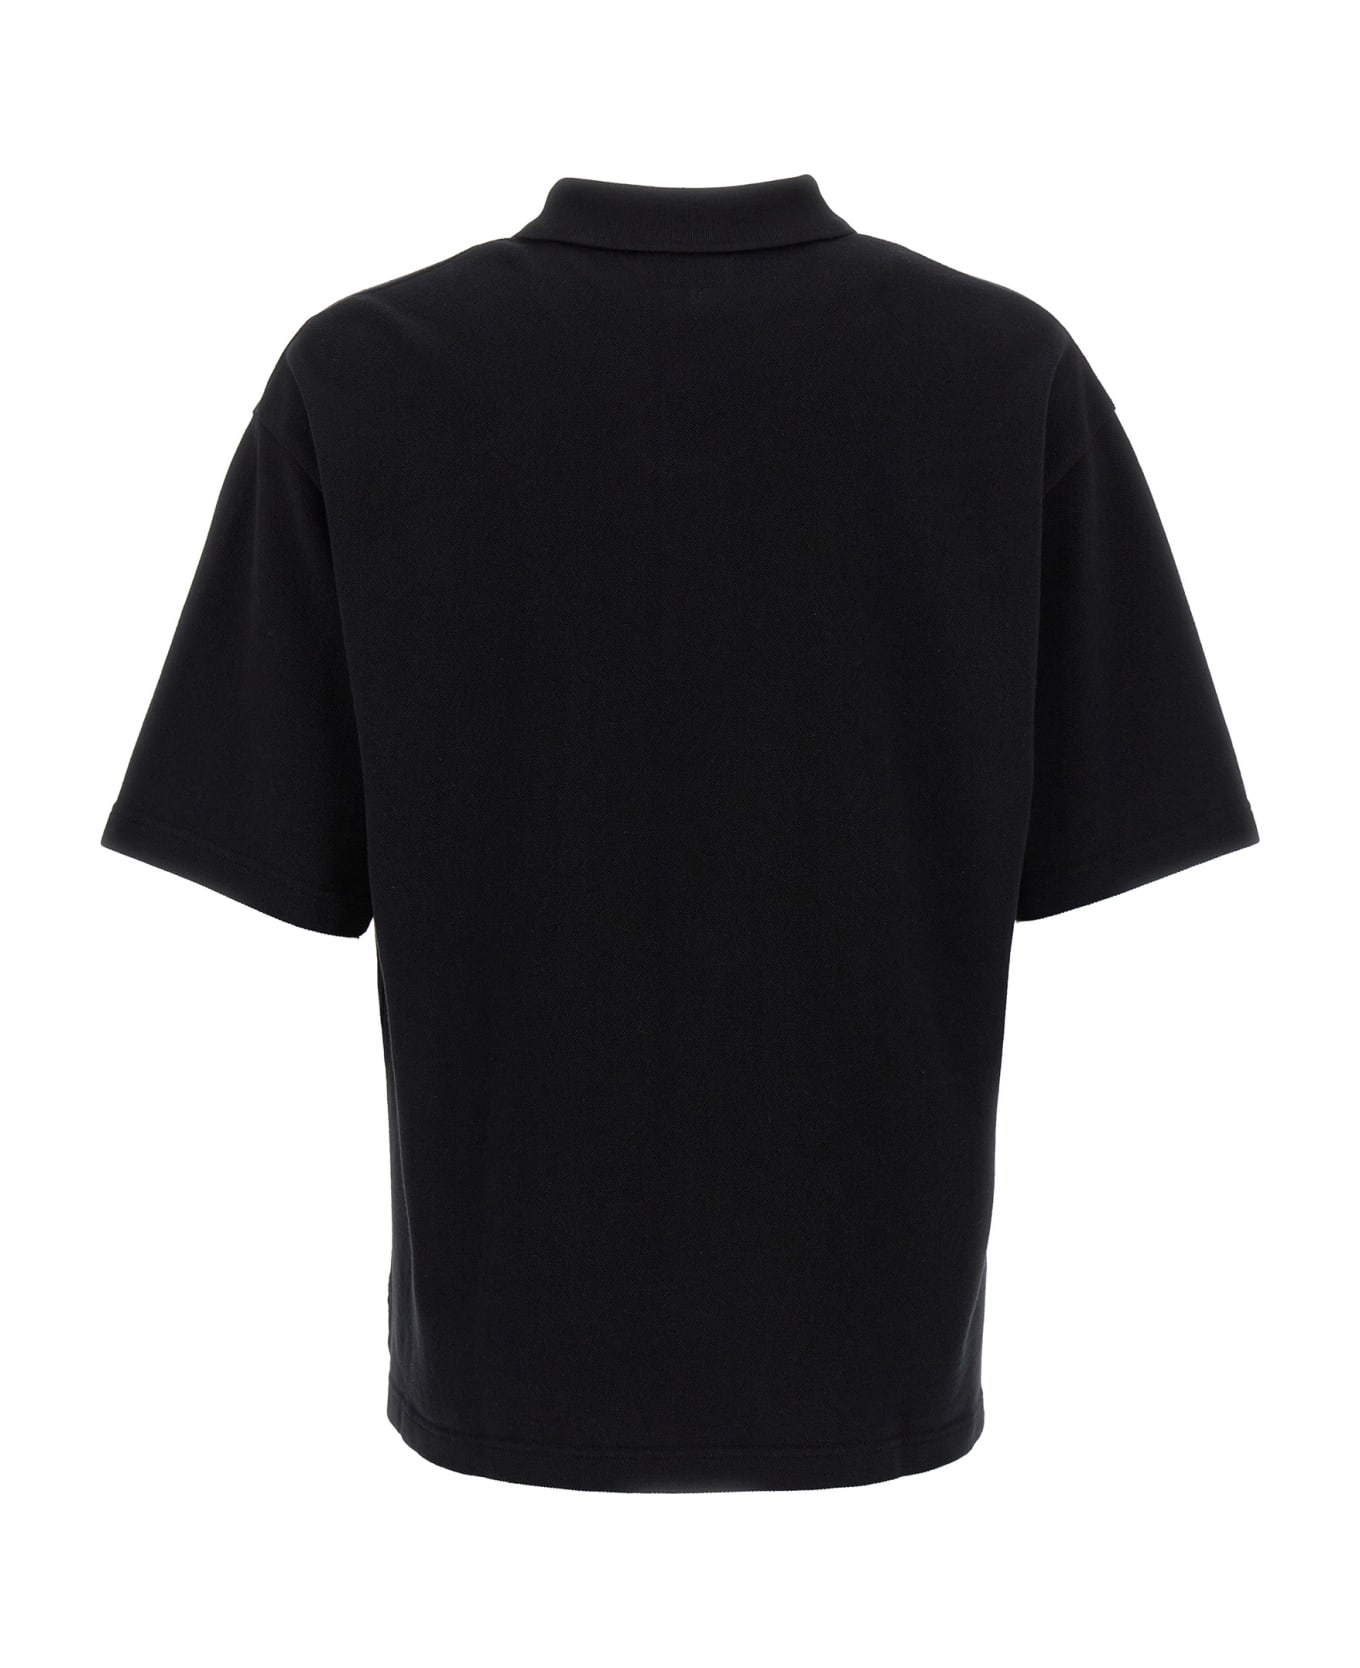 Maison Kitsuné 'bold Fox Head' Polo Shirt - Black  